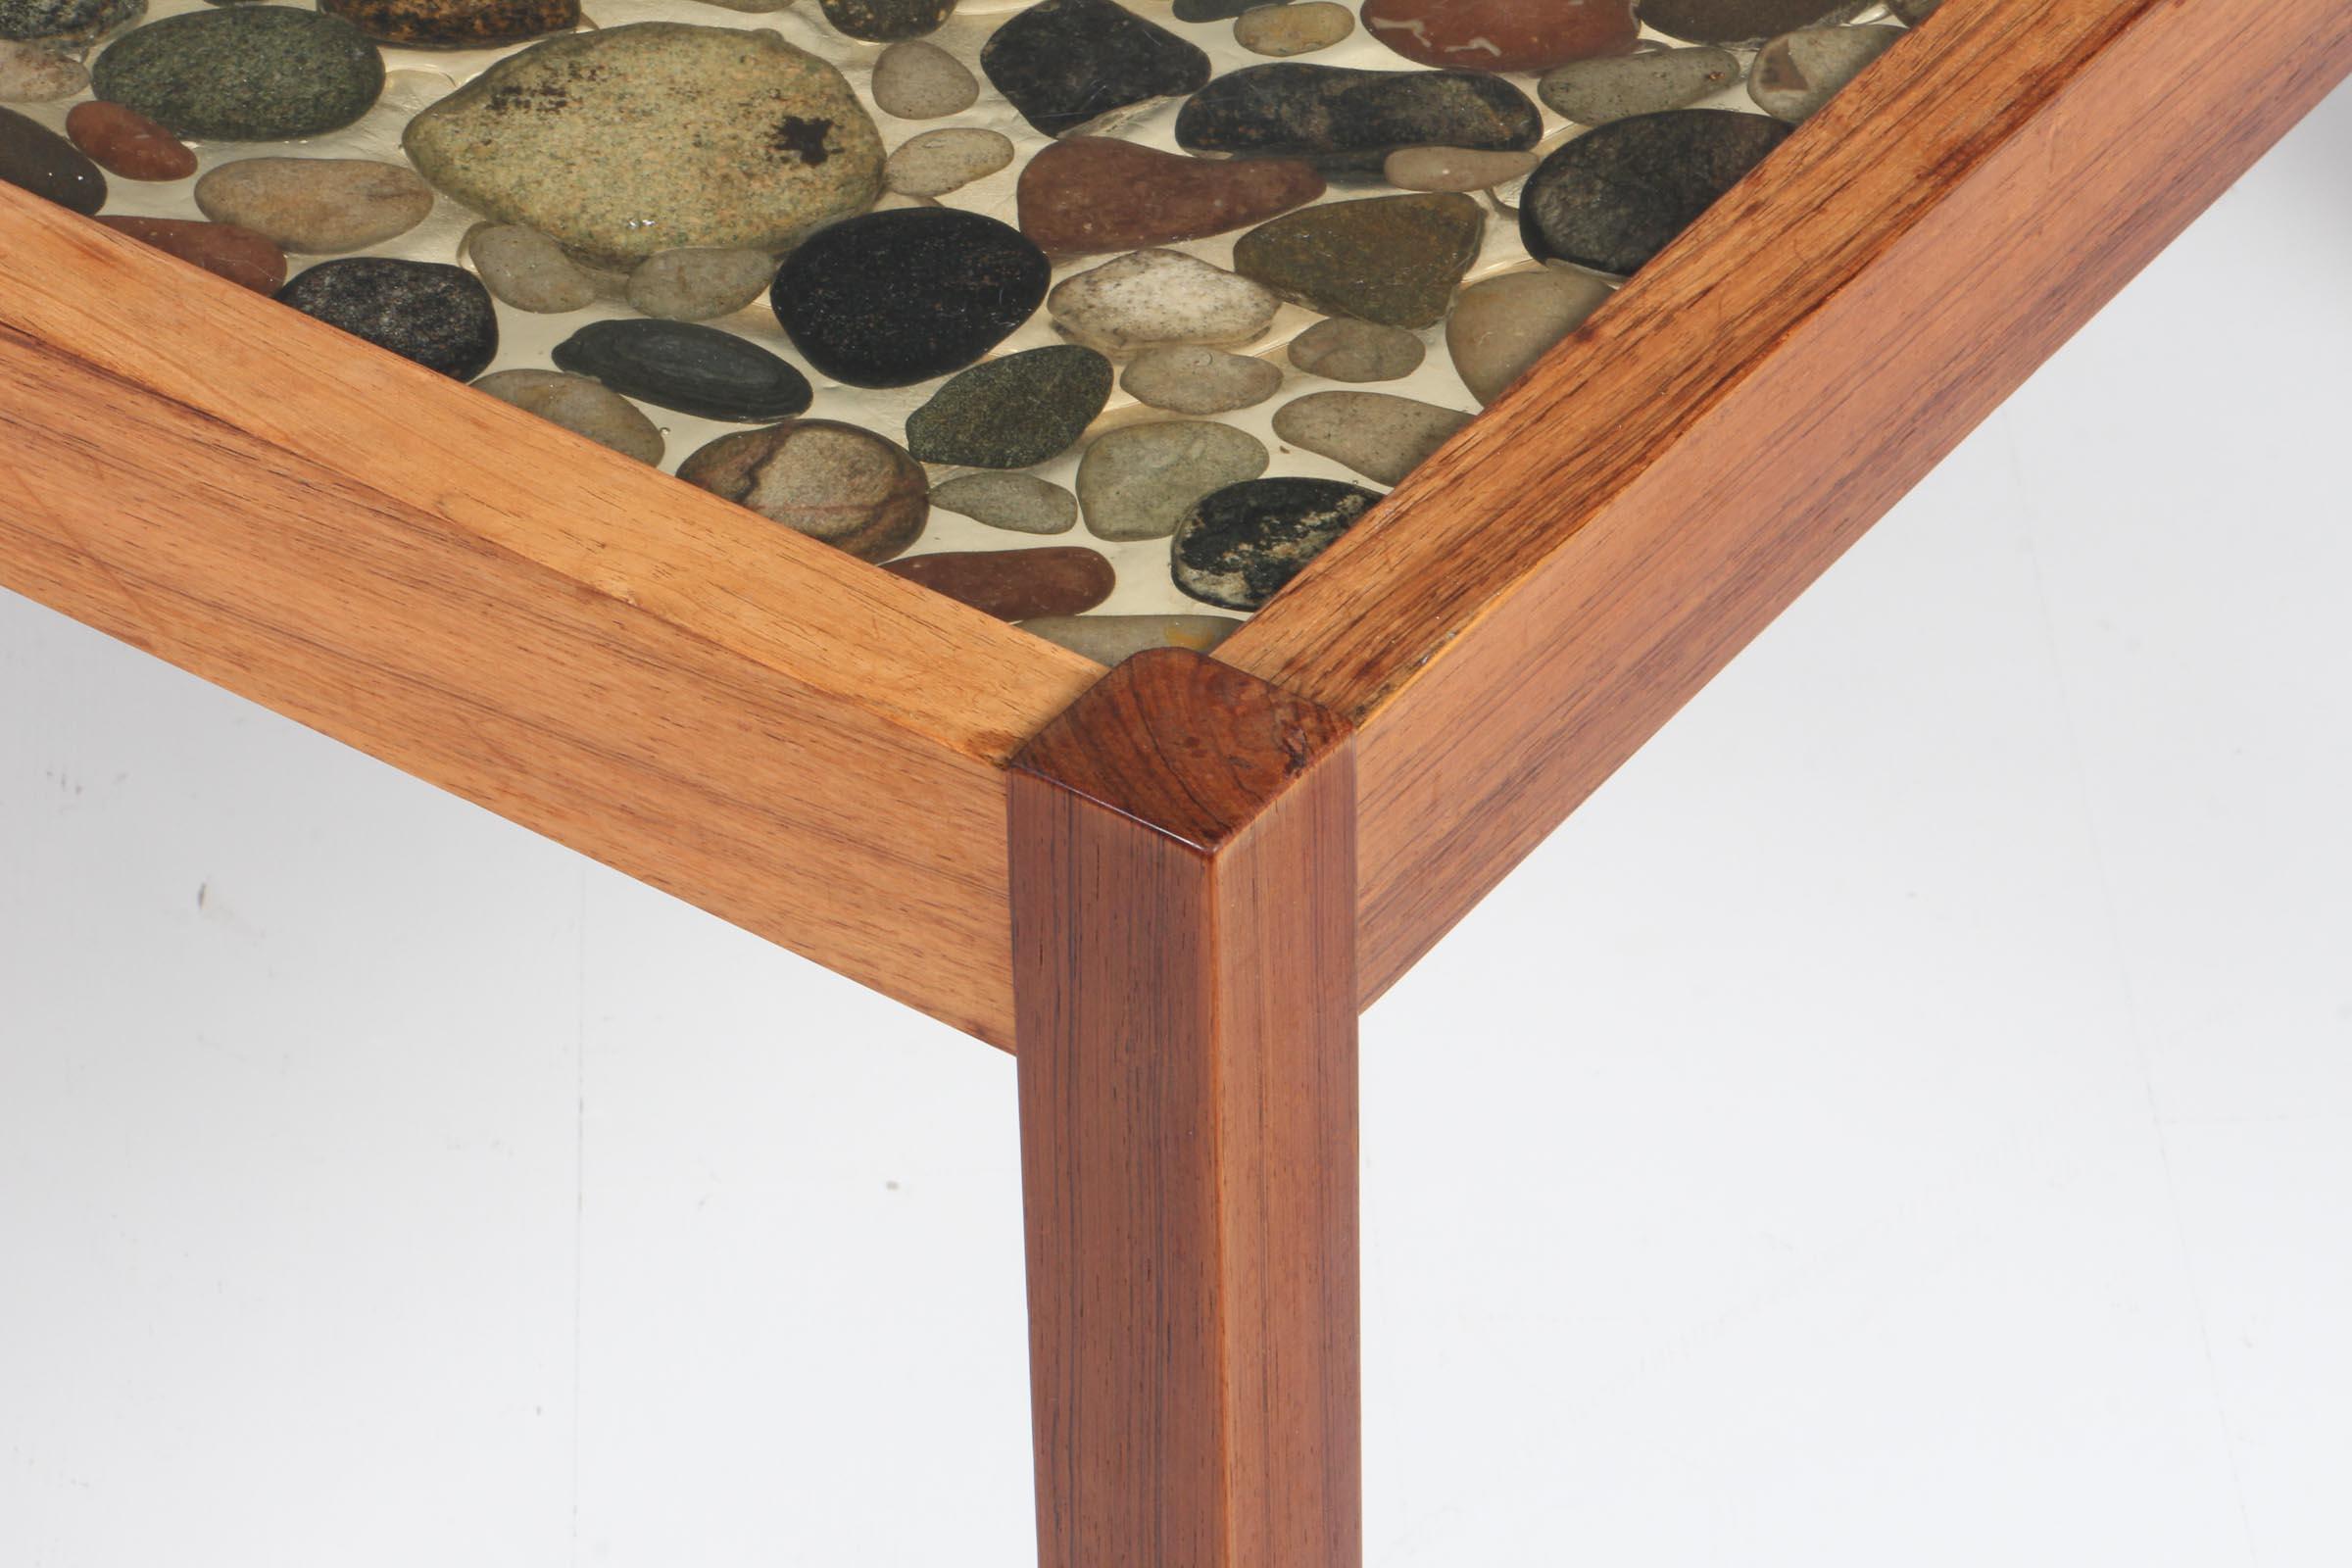 Scandinavian Modern Ib Kofod-Larsen Sofa Table, Rosewood and Stones